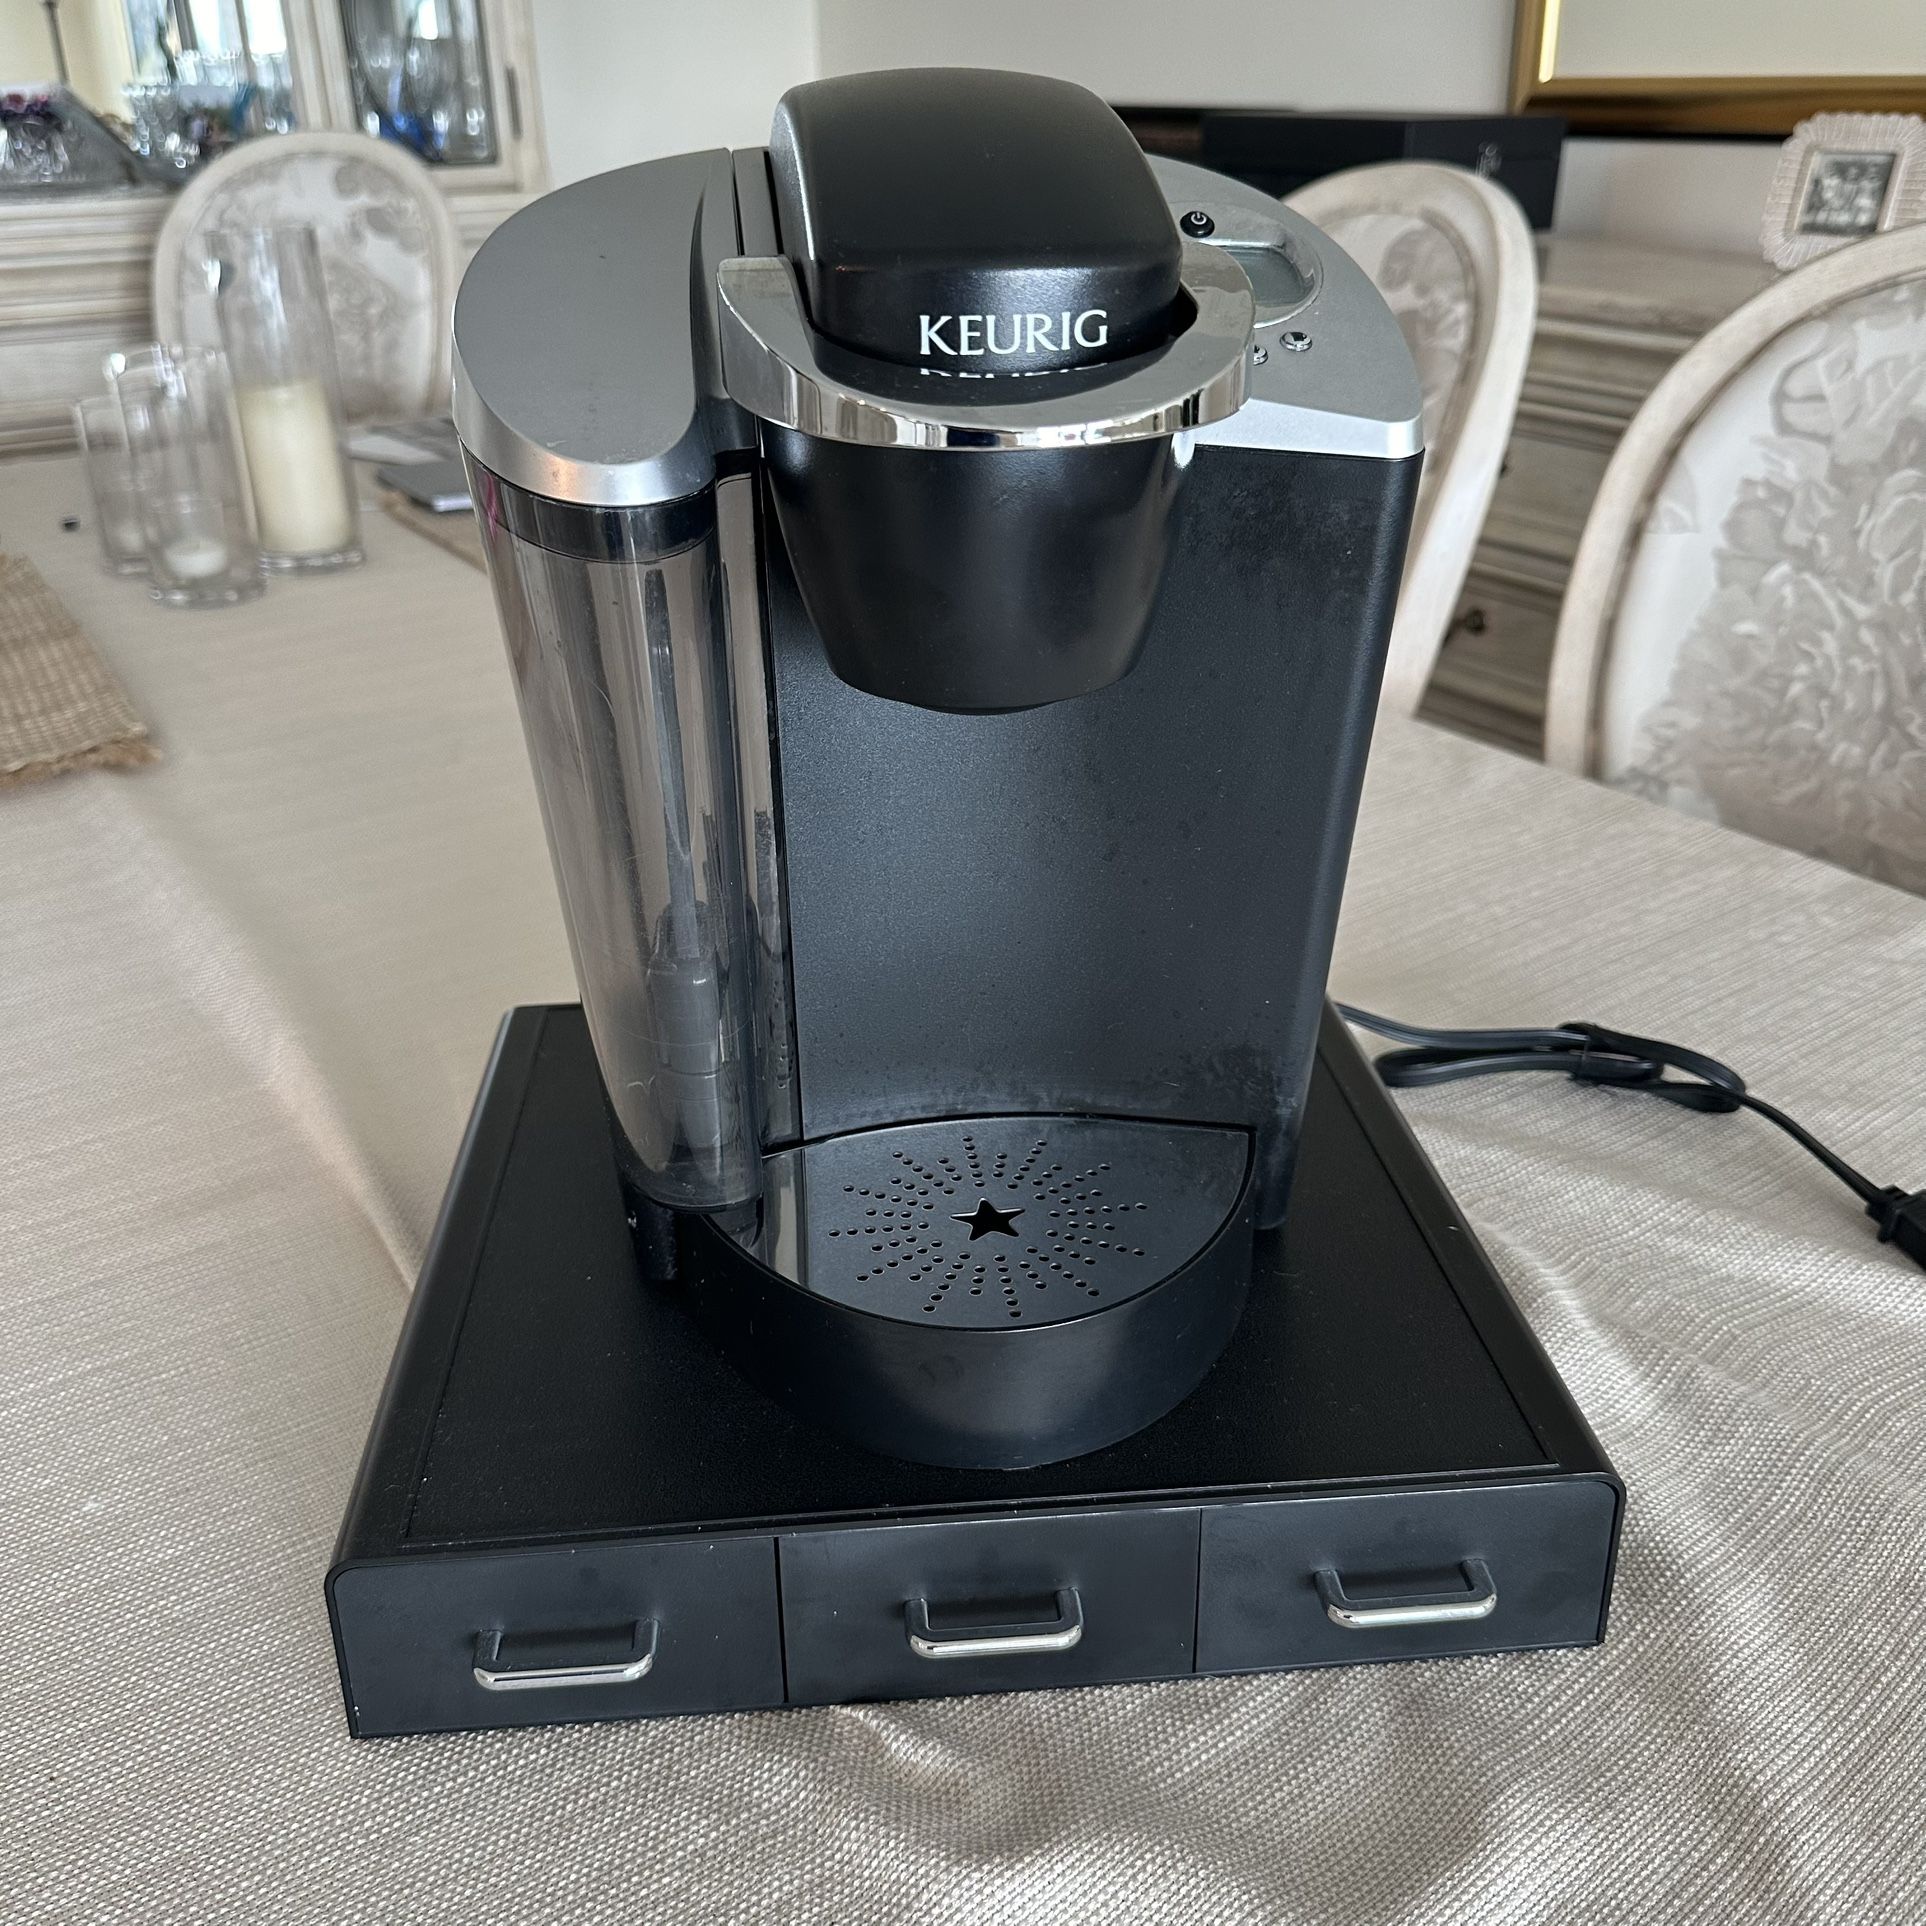 Keurig Coffee Machine With K Cup Holder